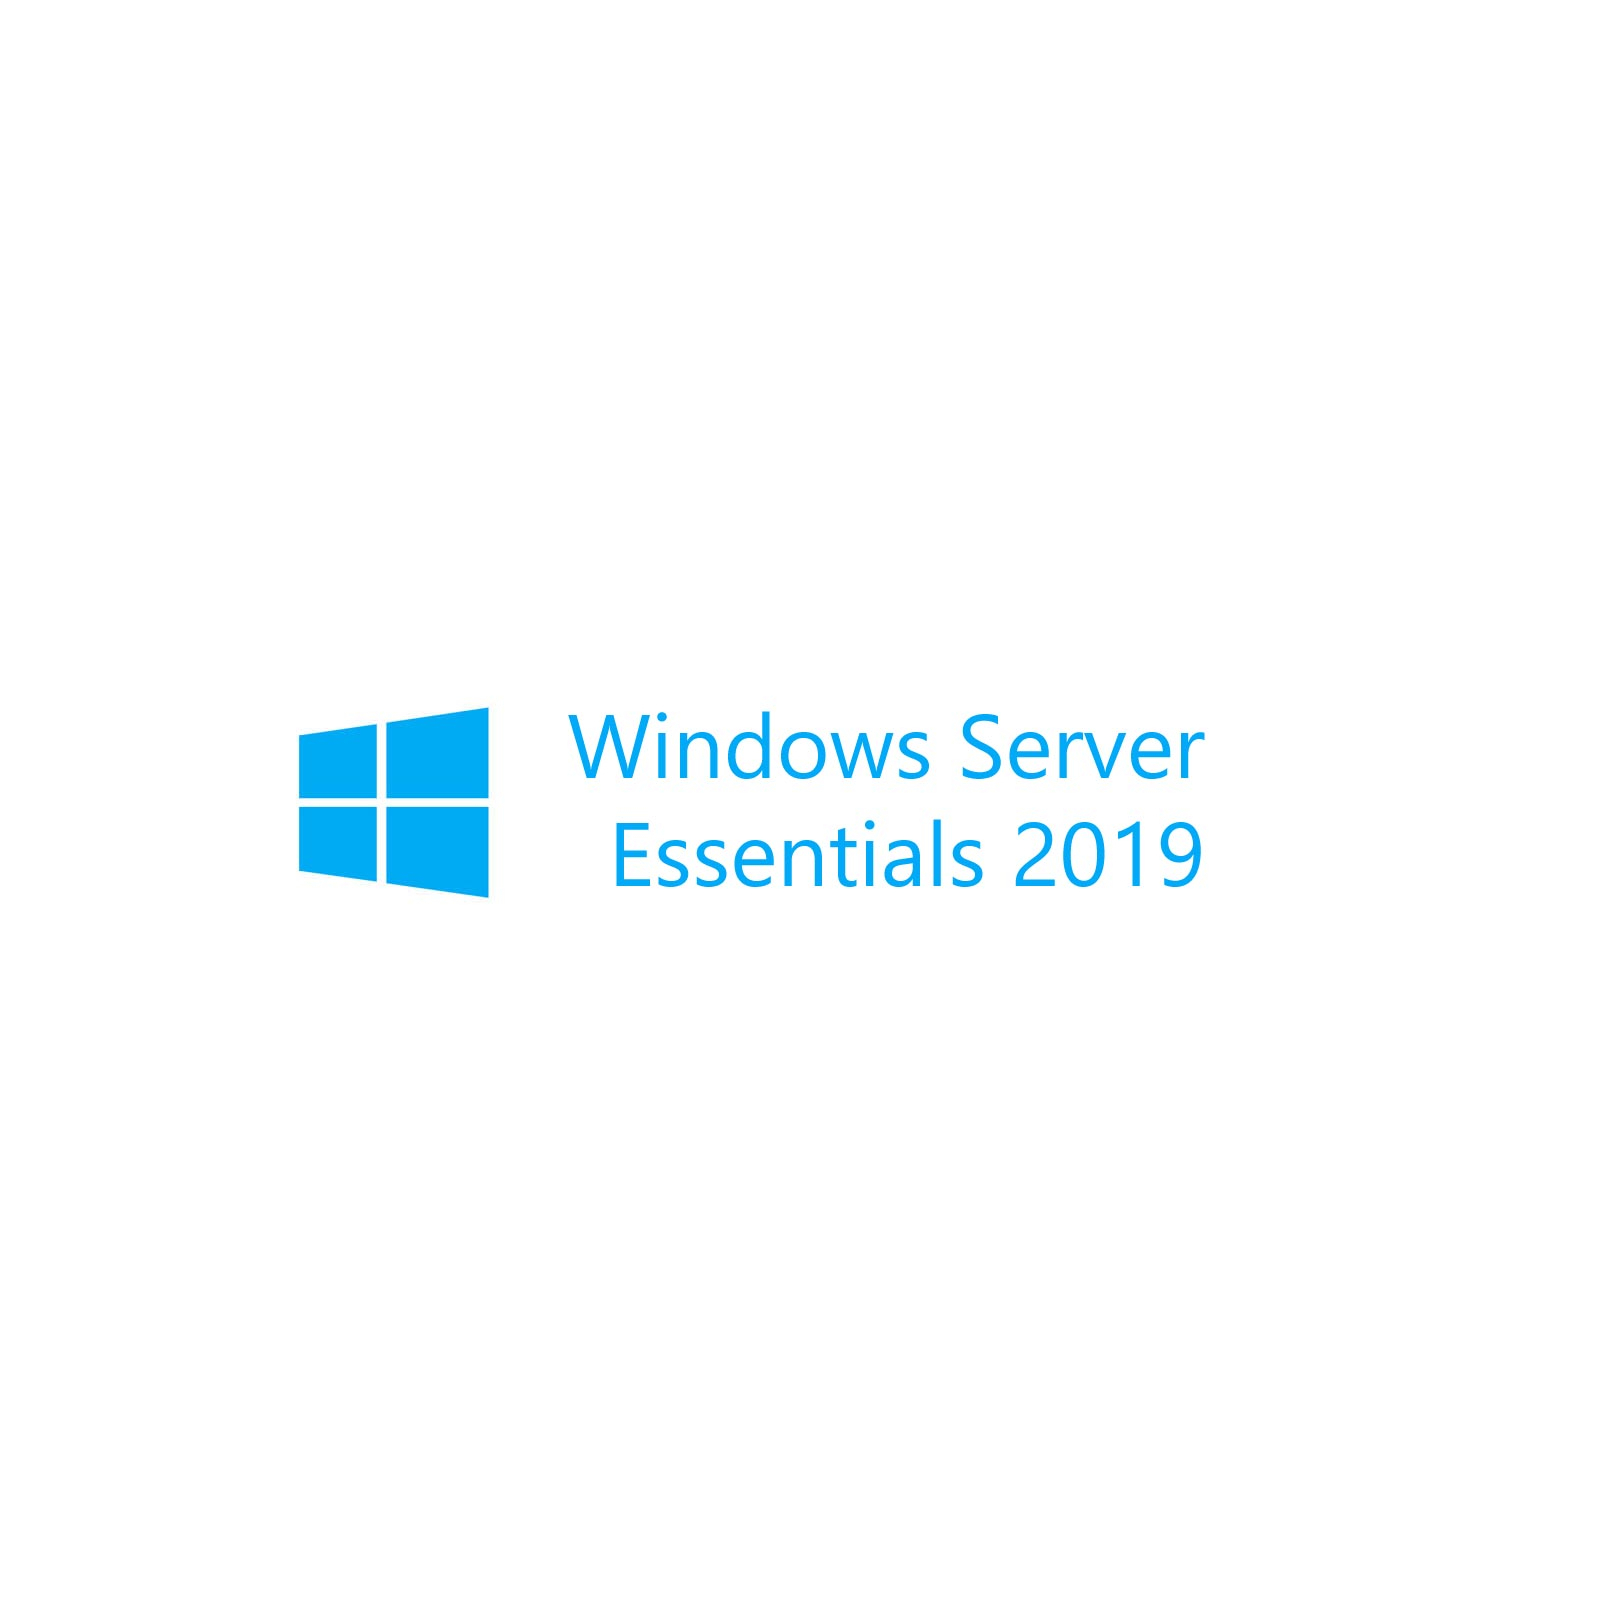 ПЗ для сервера Microsoft Windows Svr Essentials 2019 64Bit English DVD 1-2CPU (G3S-01299)